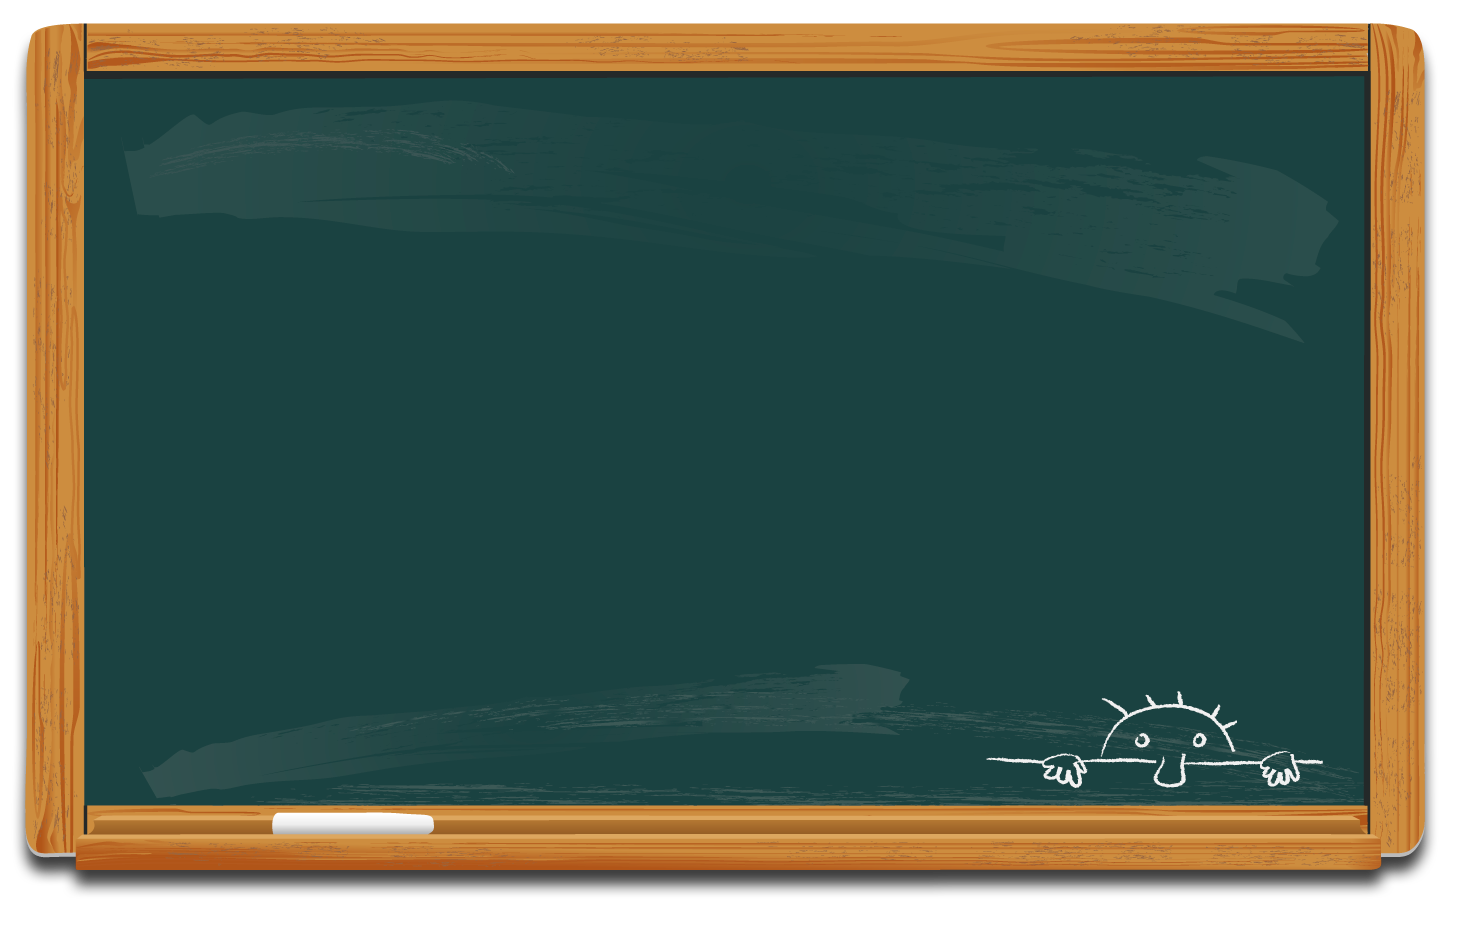 Blackboard image